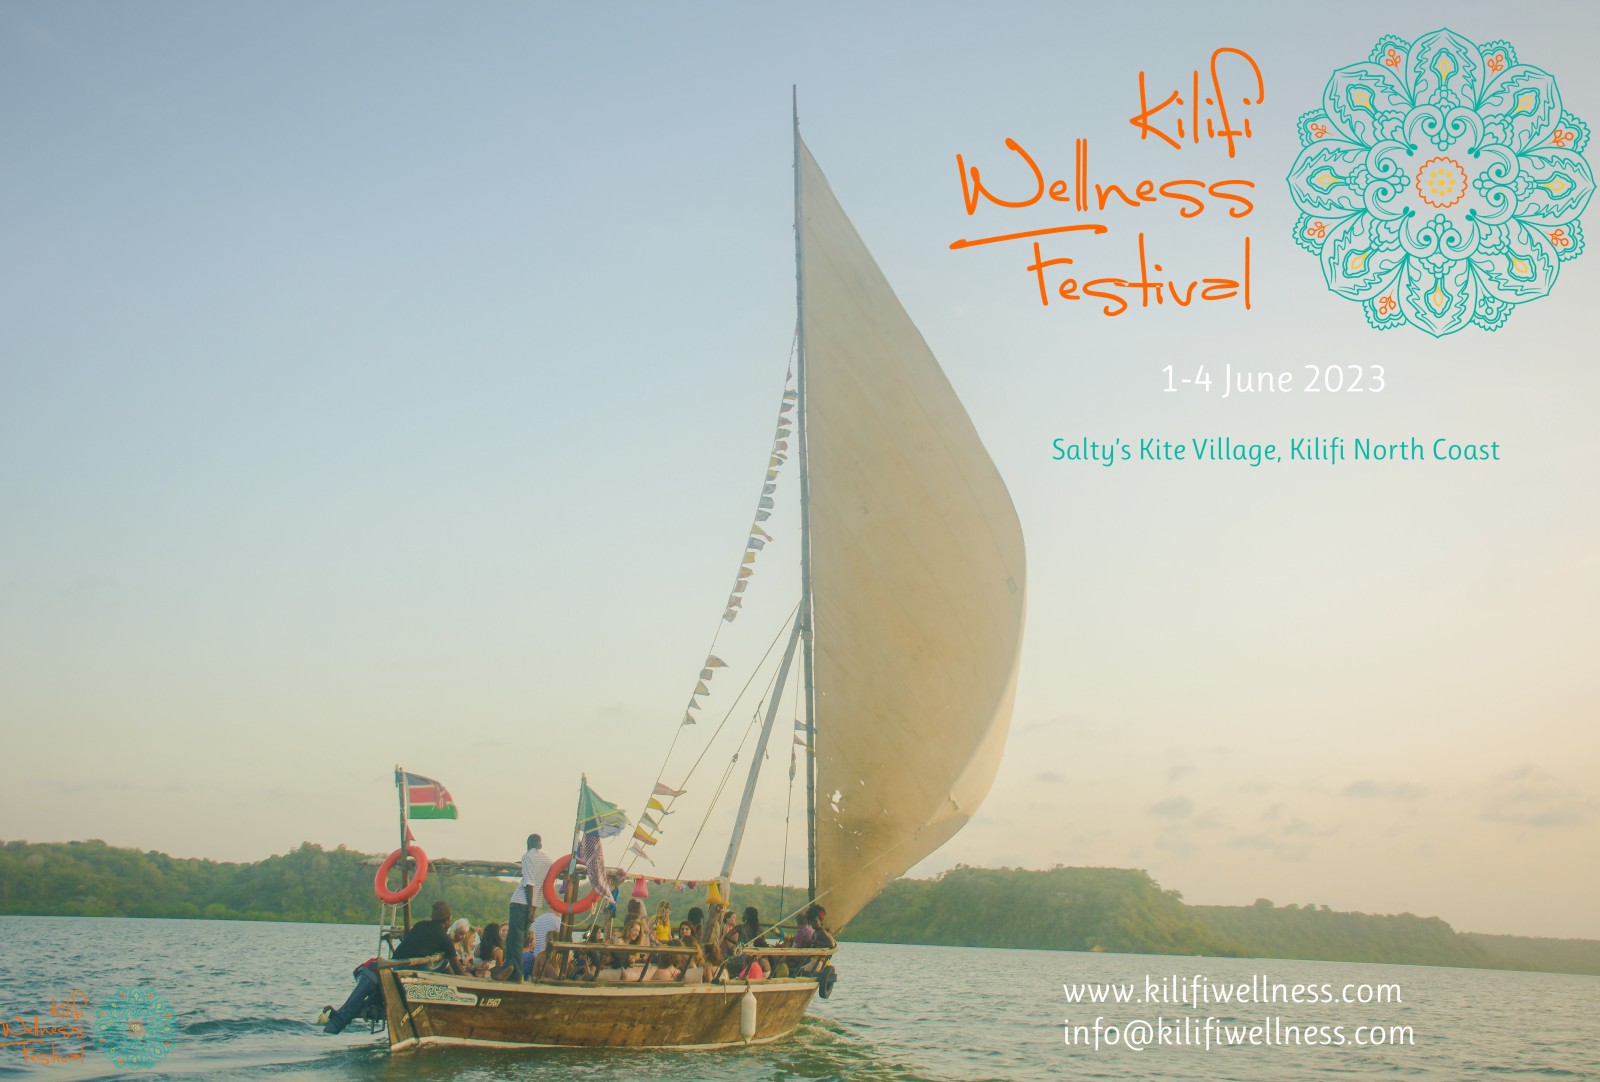 Kilifi Wellness Festival and Silver Palm